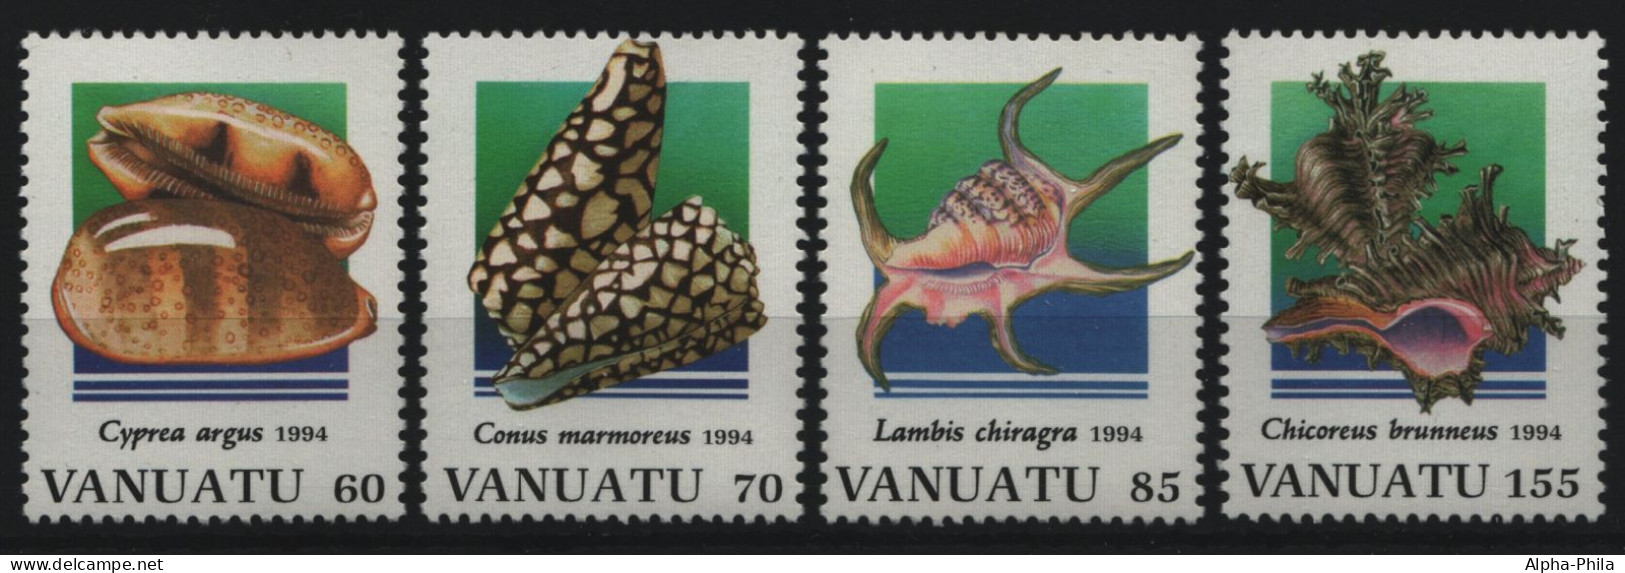 Vanuatu 1994 - Mi-Nr. 956-959 ** - MNH - Meeresschnecken / Marine Snails - Vanuatu (1980-...)